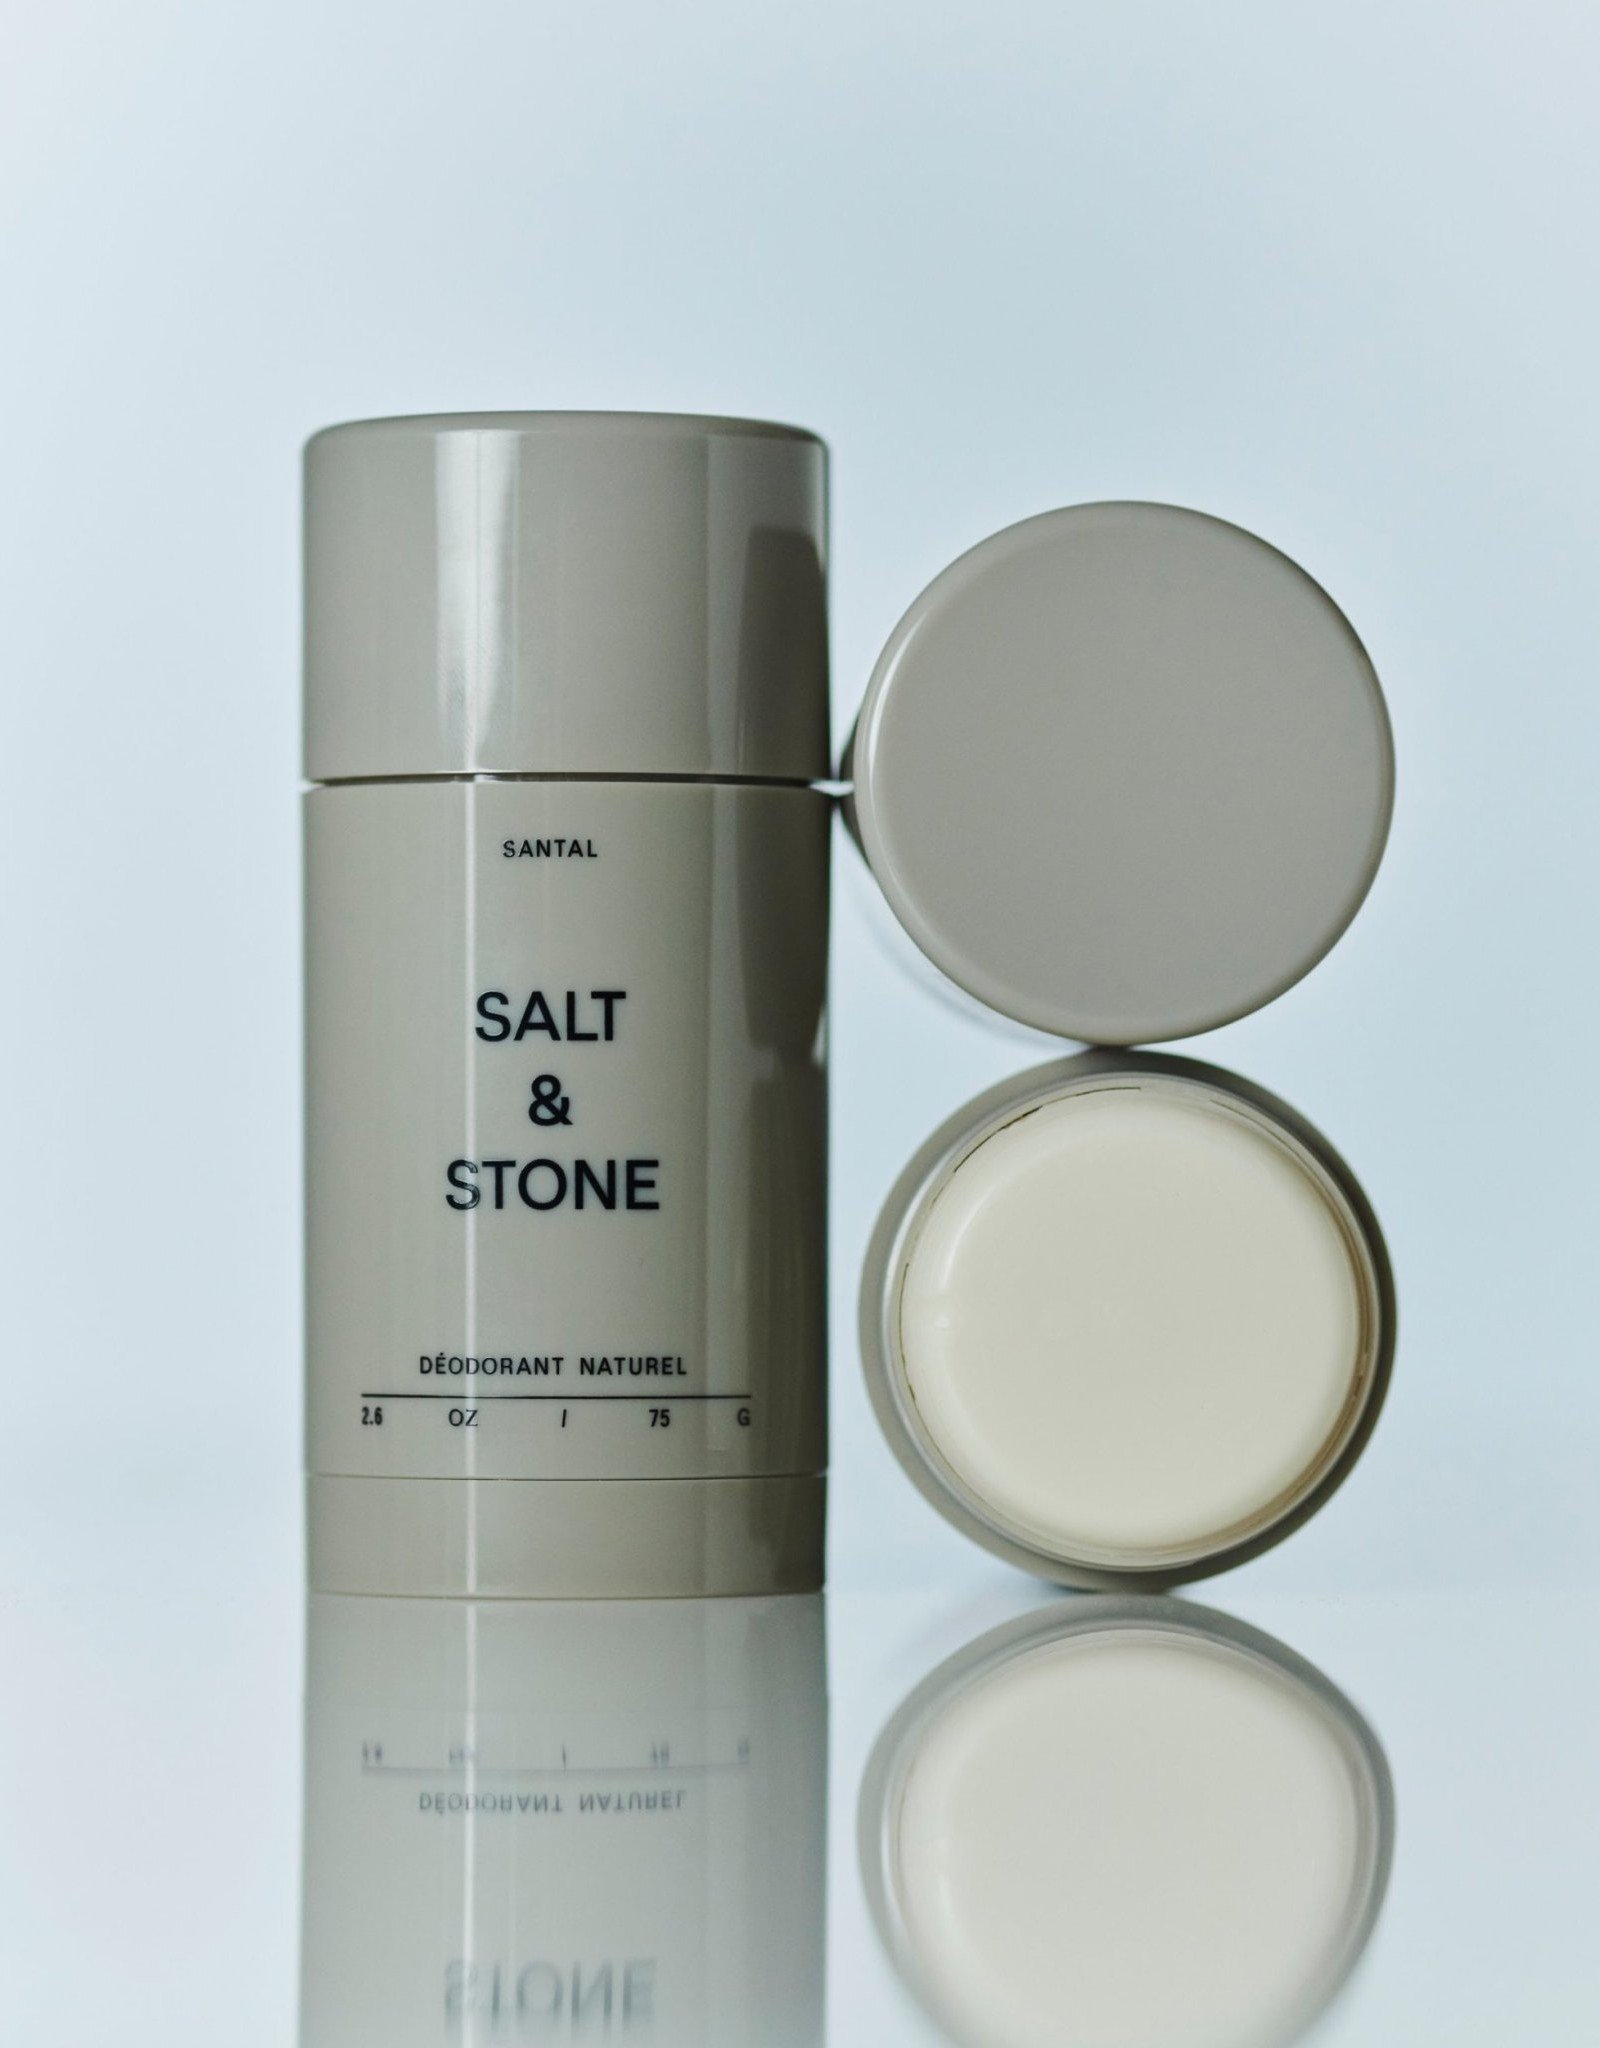 Salt & Stone Santal Natural Deodorant - Formula No. 1